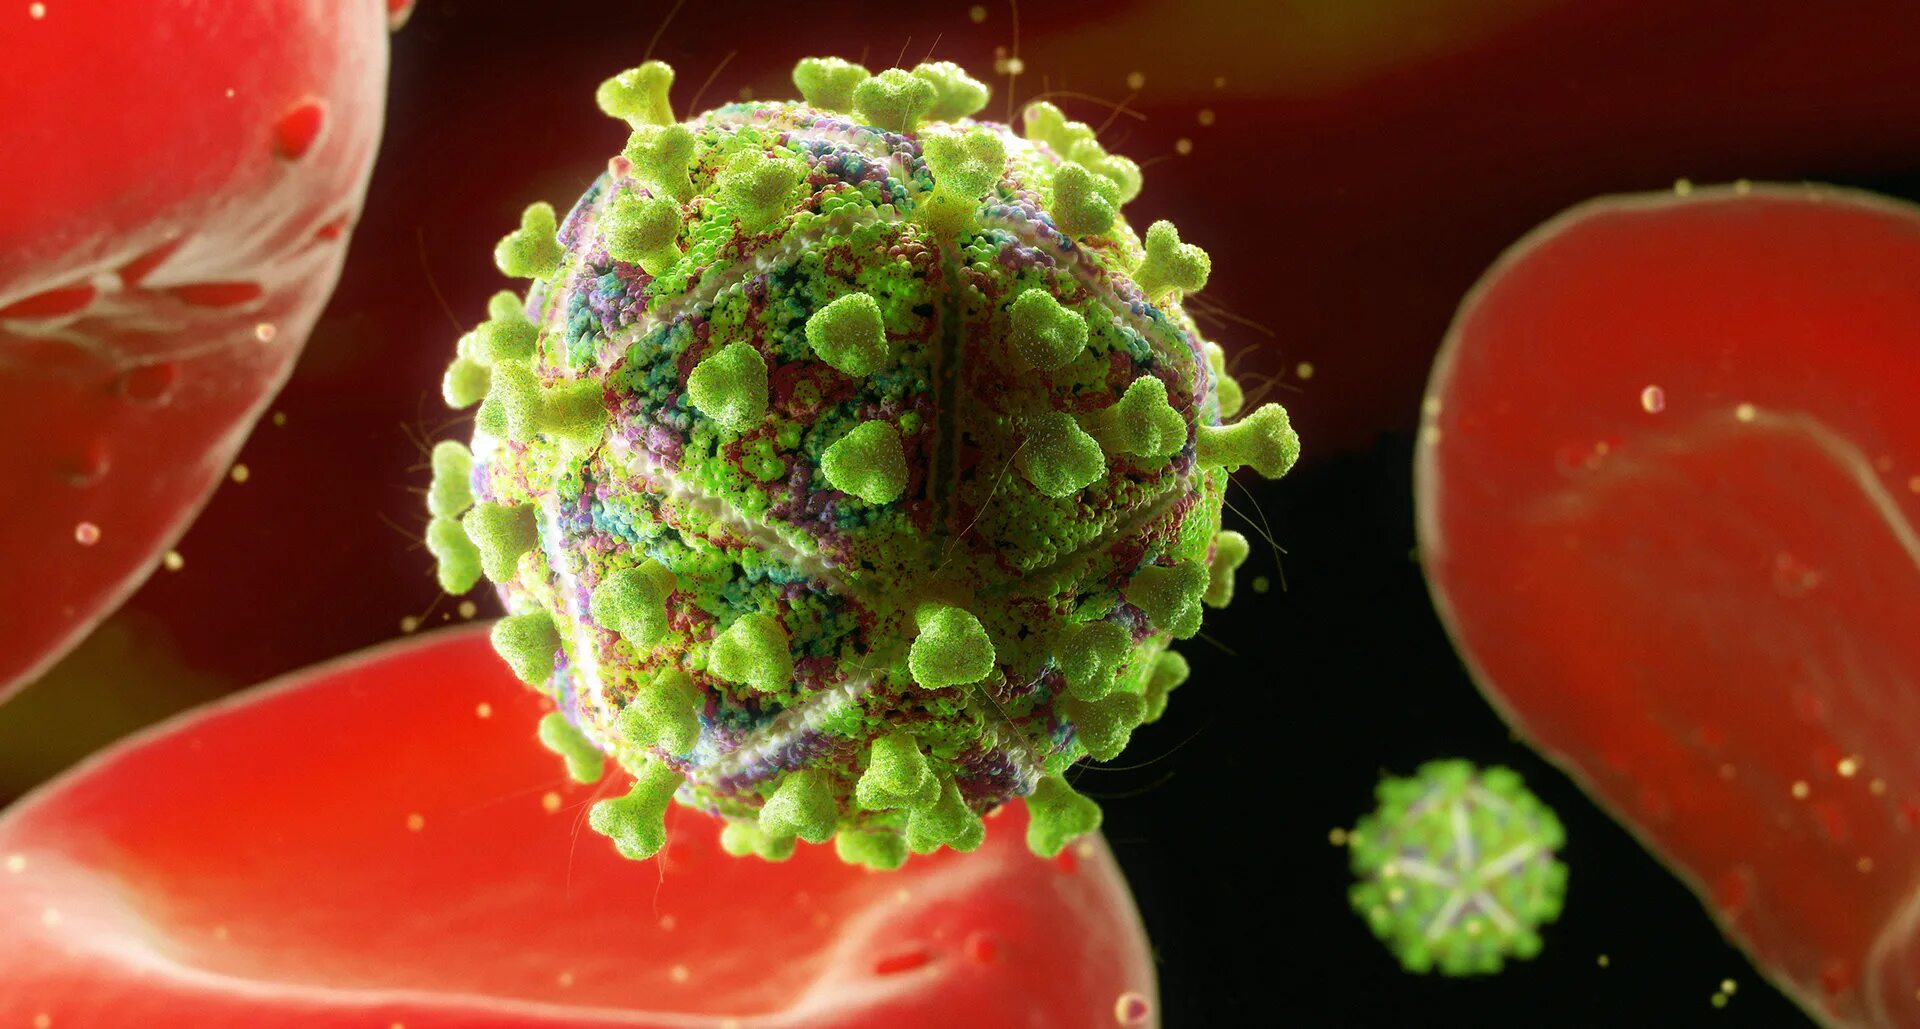 Спид вызван вирусом. СПИД бактерия. Вирус СПИДА. ВИЧ фото вируса.